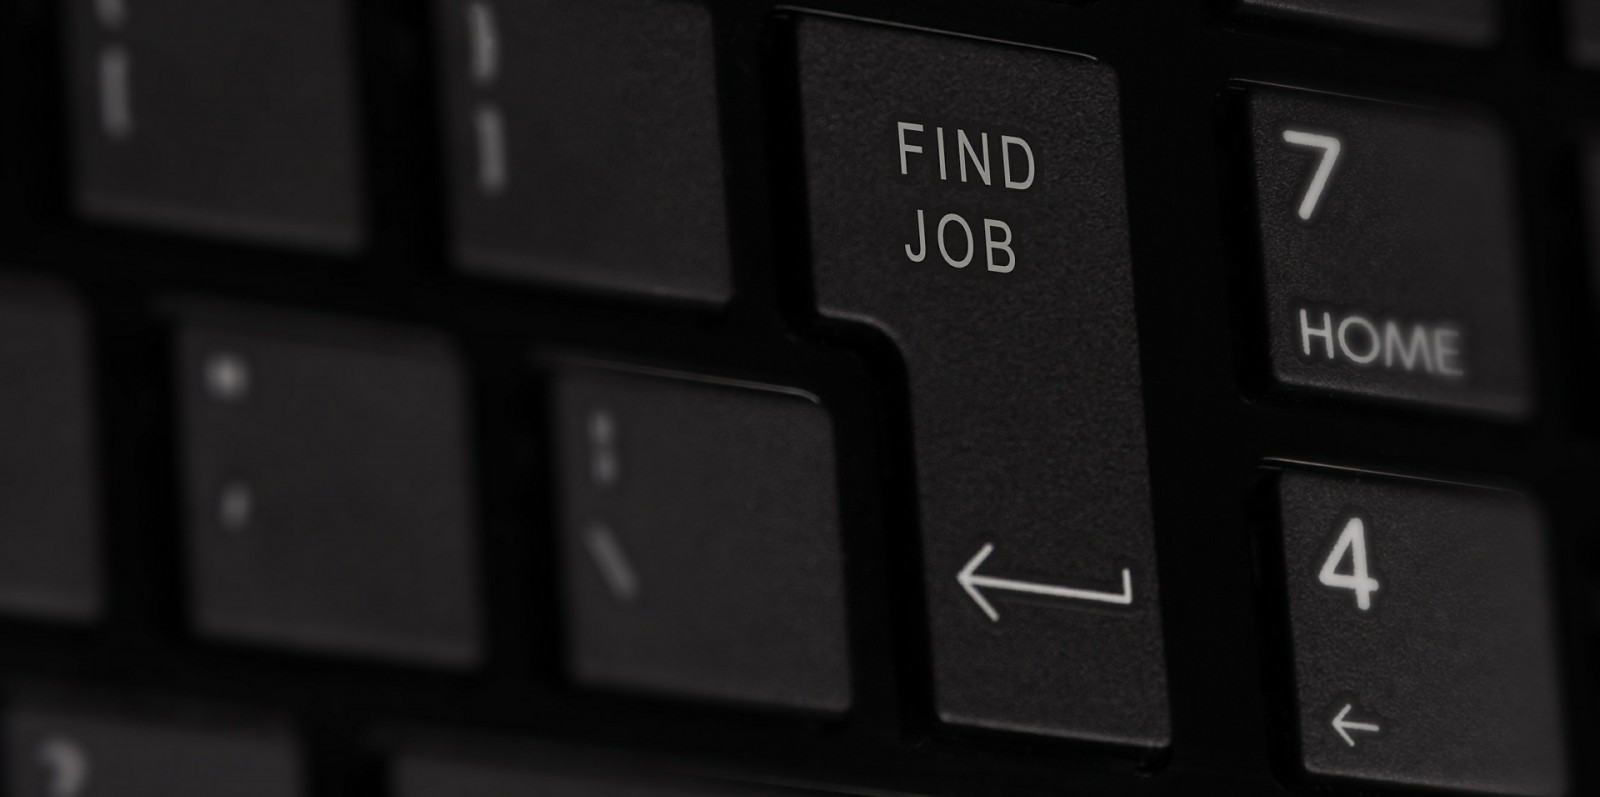 Keyboard with 'Find Job' key. 